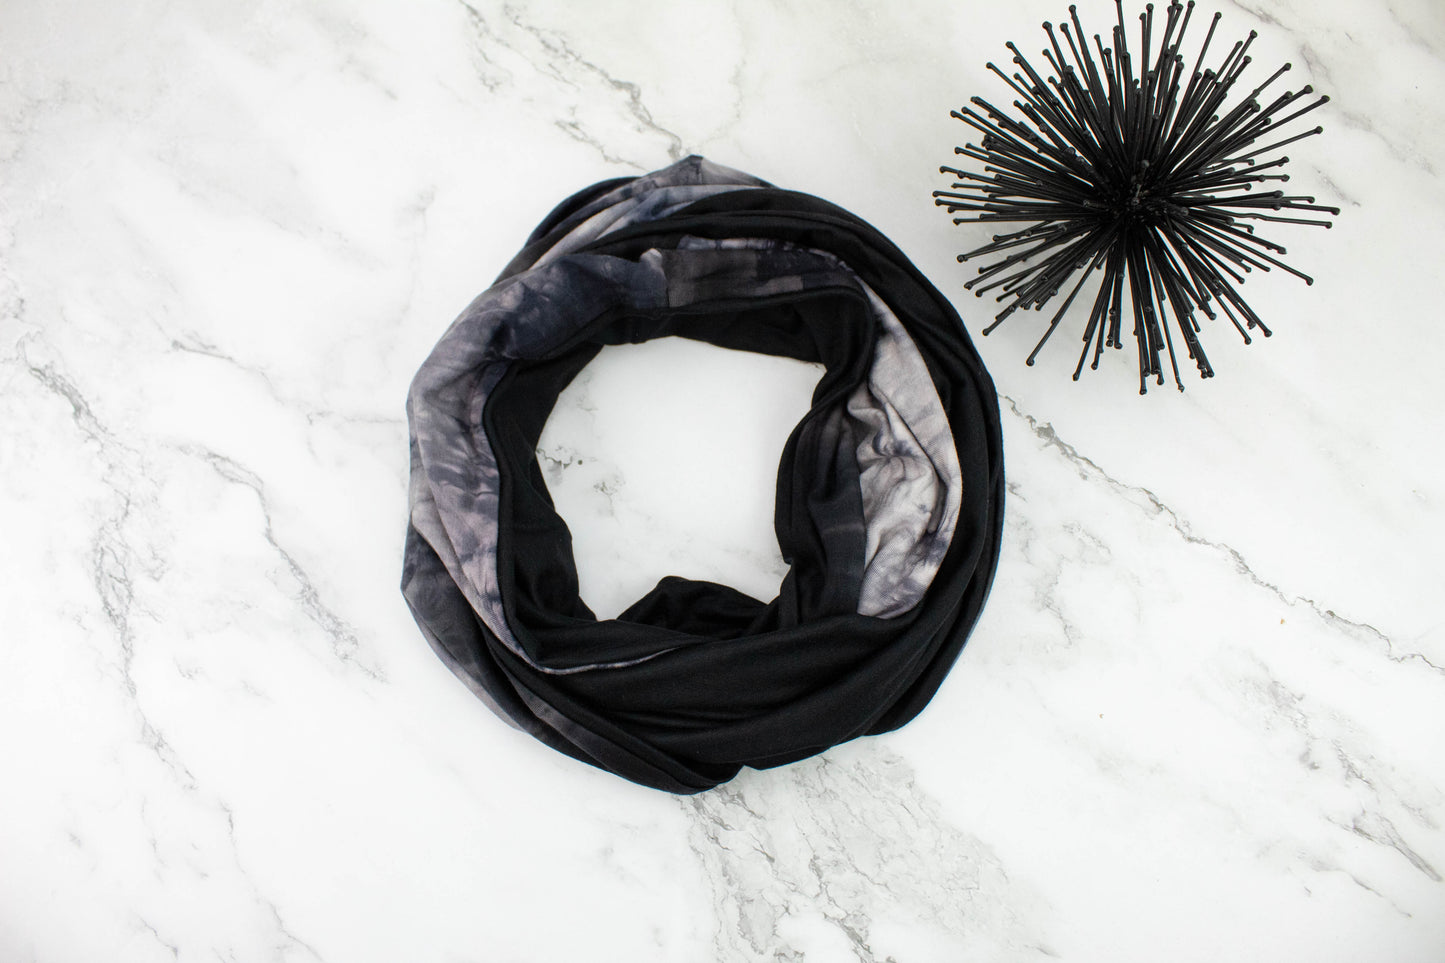 Black and Eggplant Tie Dye Knit Infinity Scarf